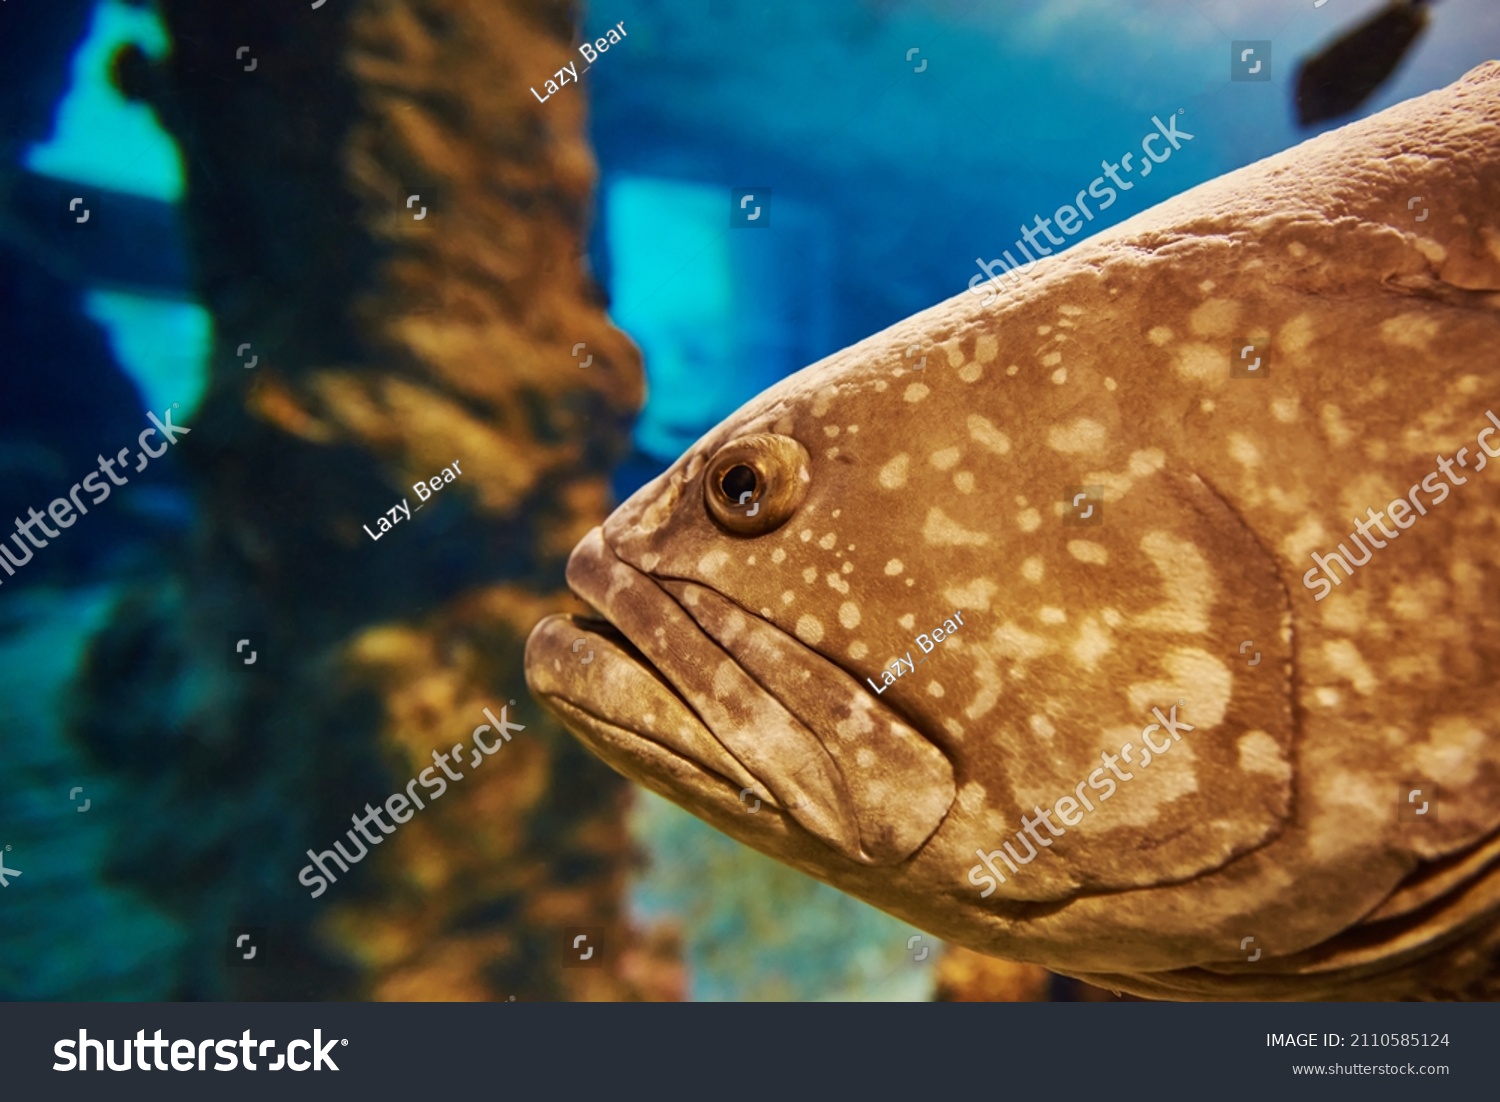 Grouper fish in the deep under water, sea fish in zoo aquarium, close up #2110585124